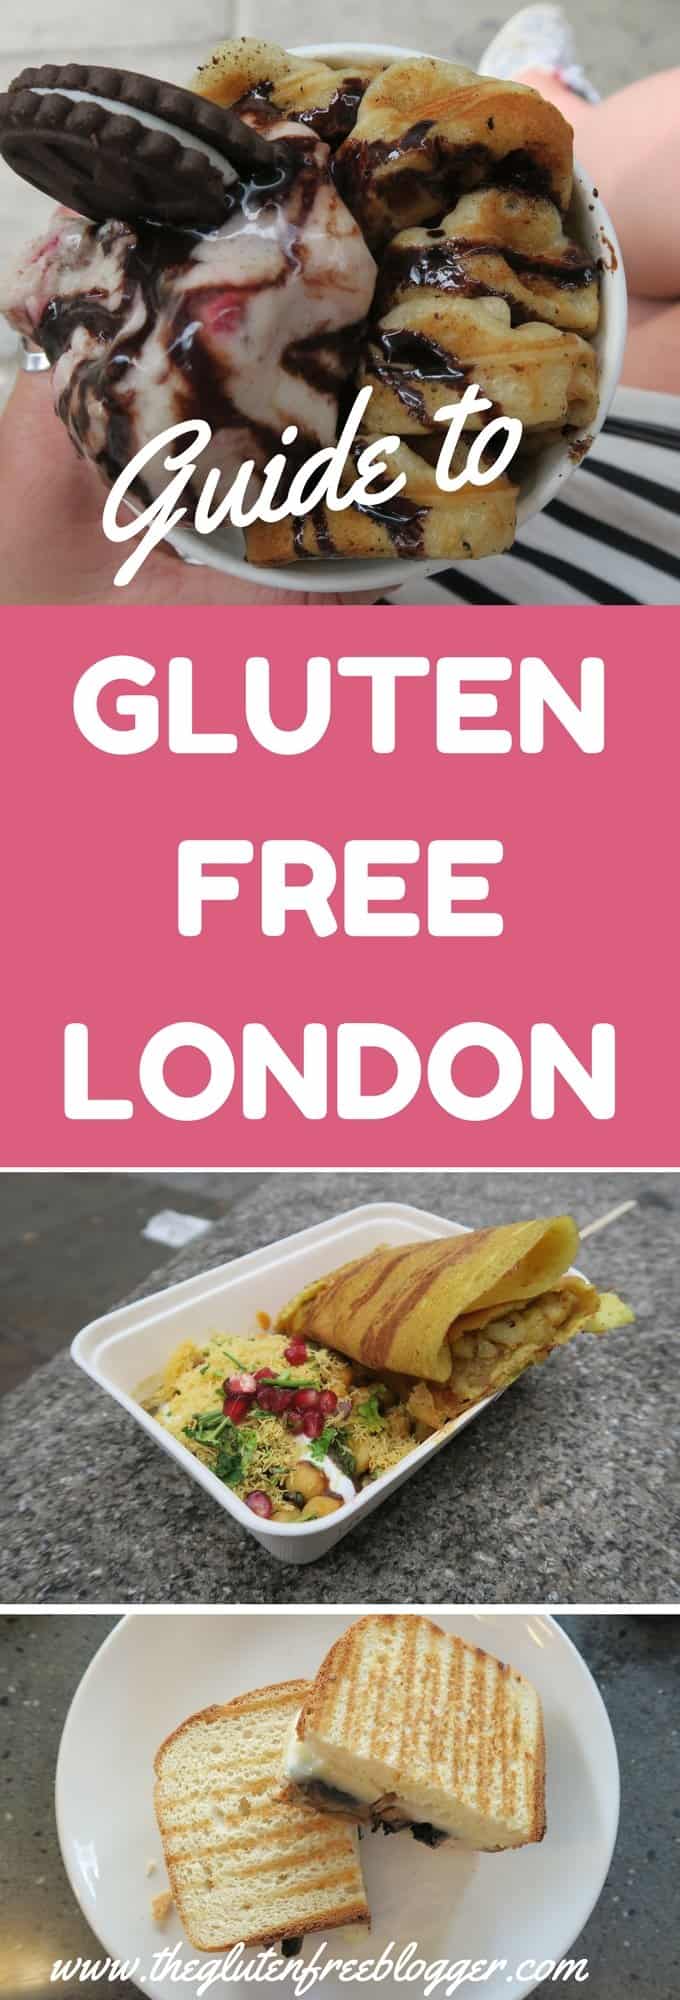 GLUTEN FREE LONDON- 10 places to eat gluten free in London - www.theglutenfreeblogger.com